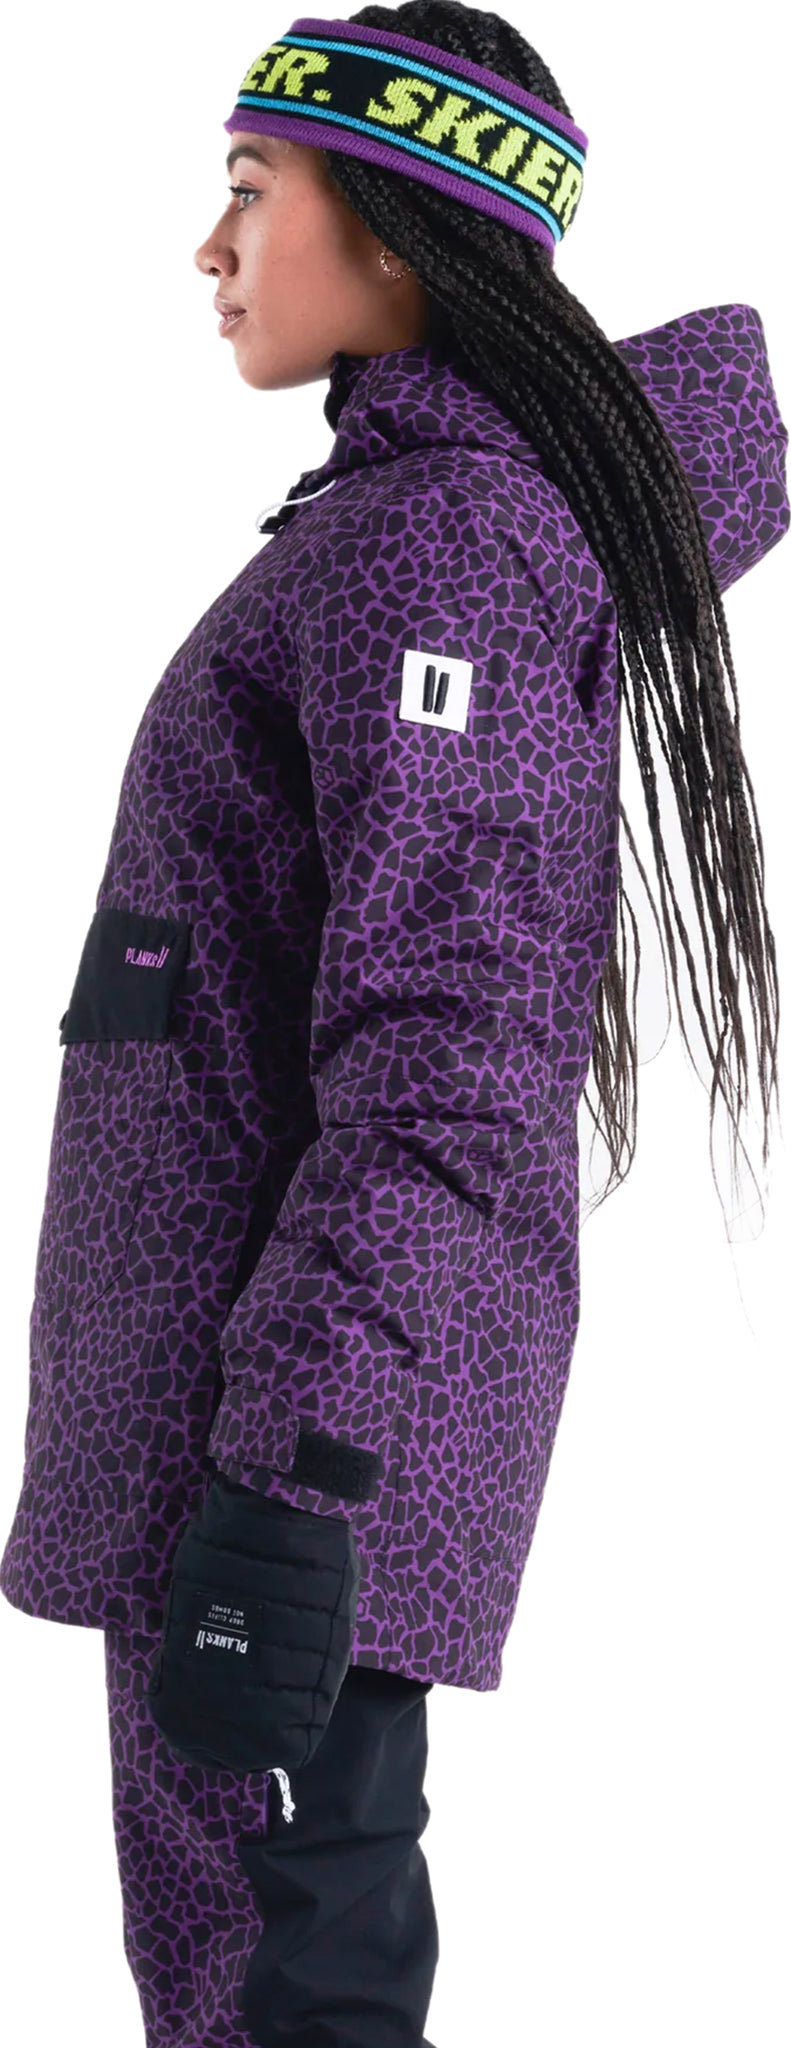 Rip curl Rider high waist 10k/ 10k lilac women's ski pants Textile